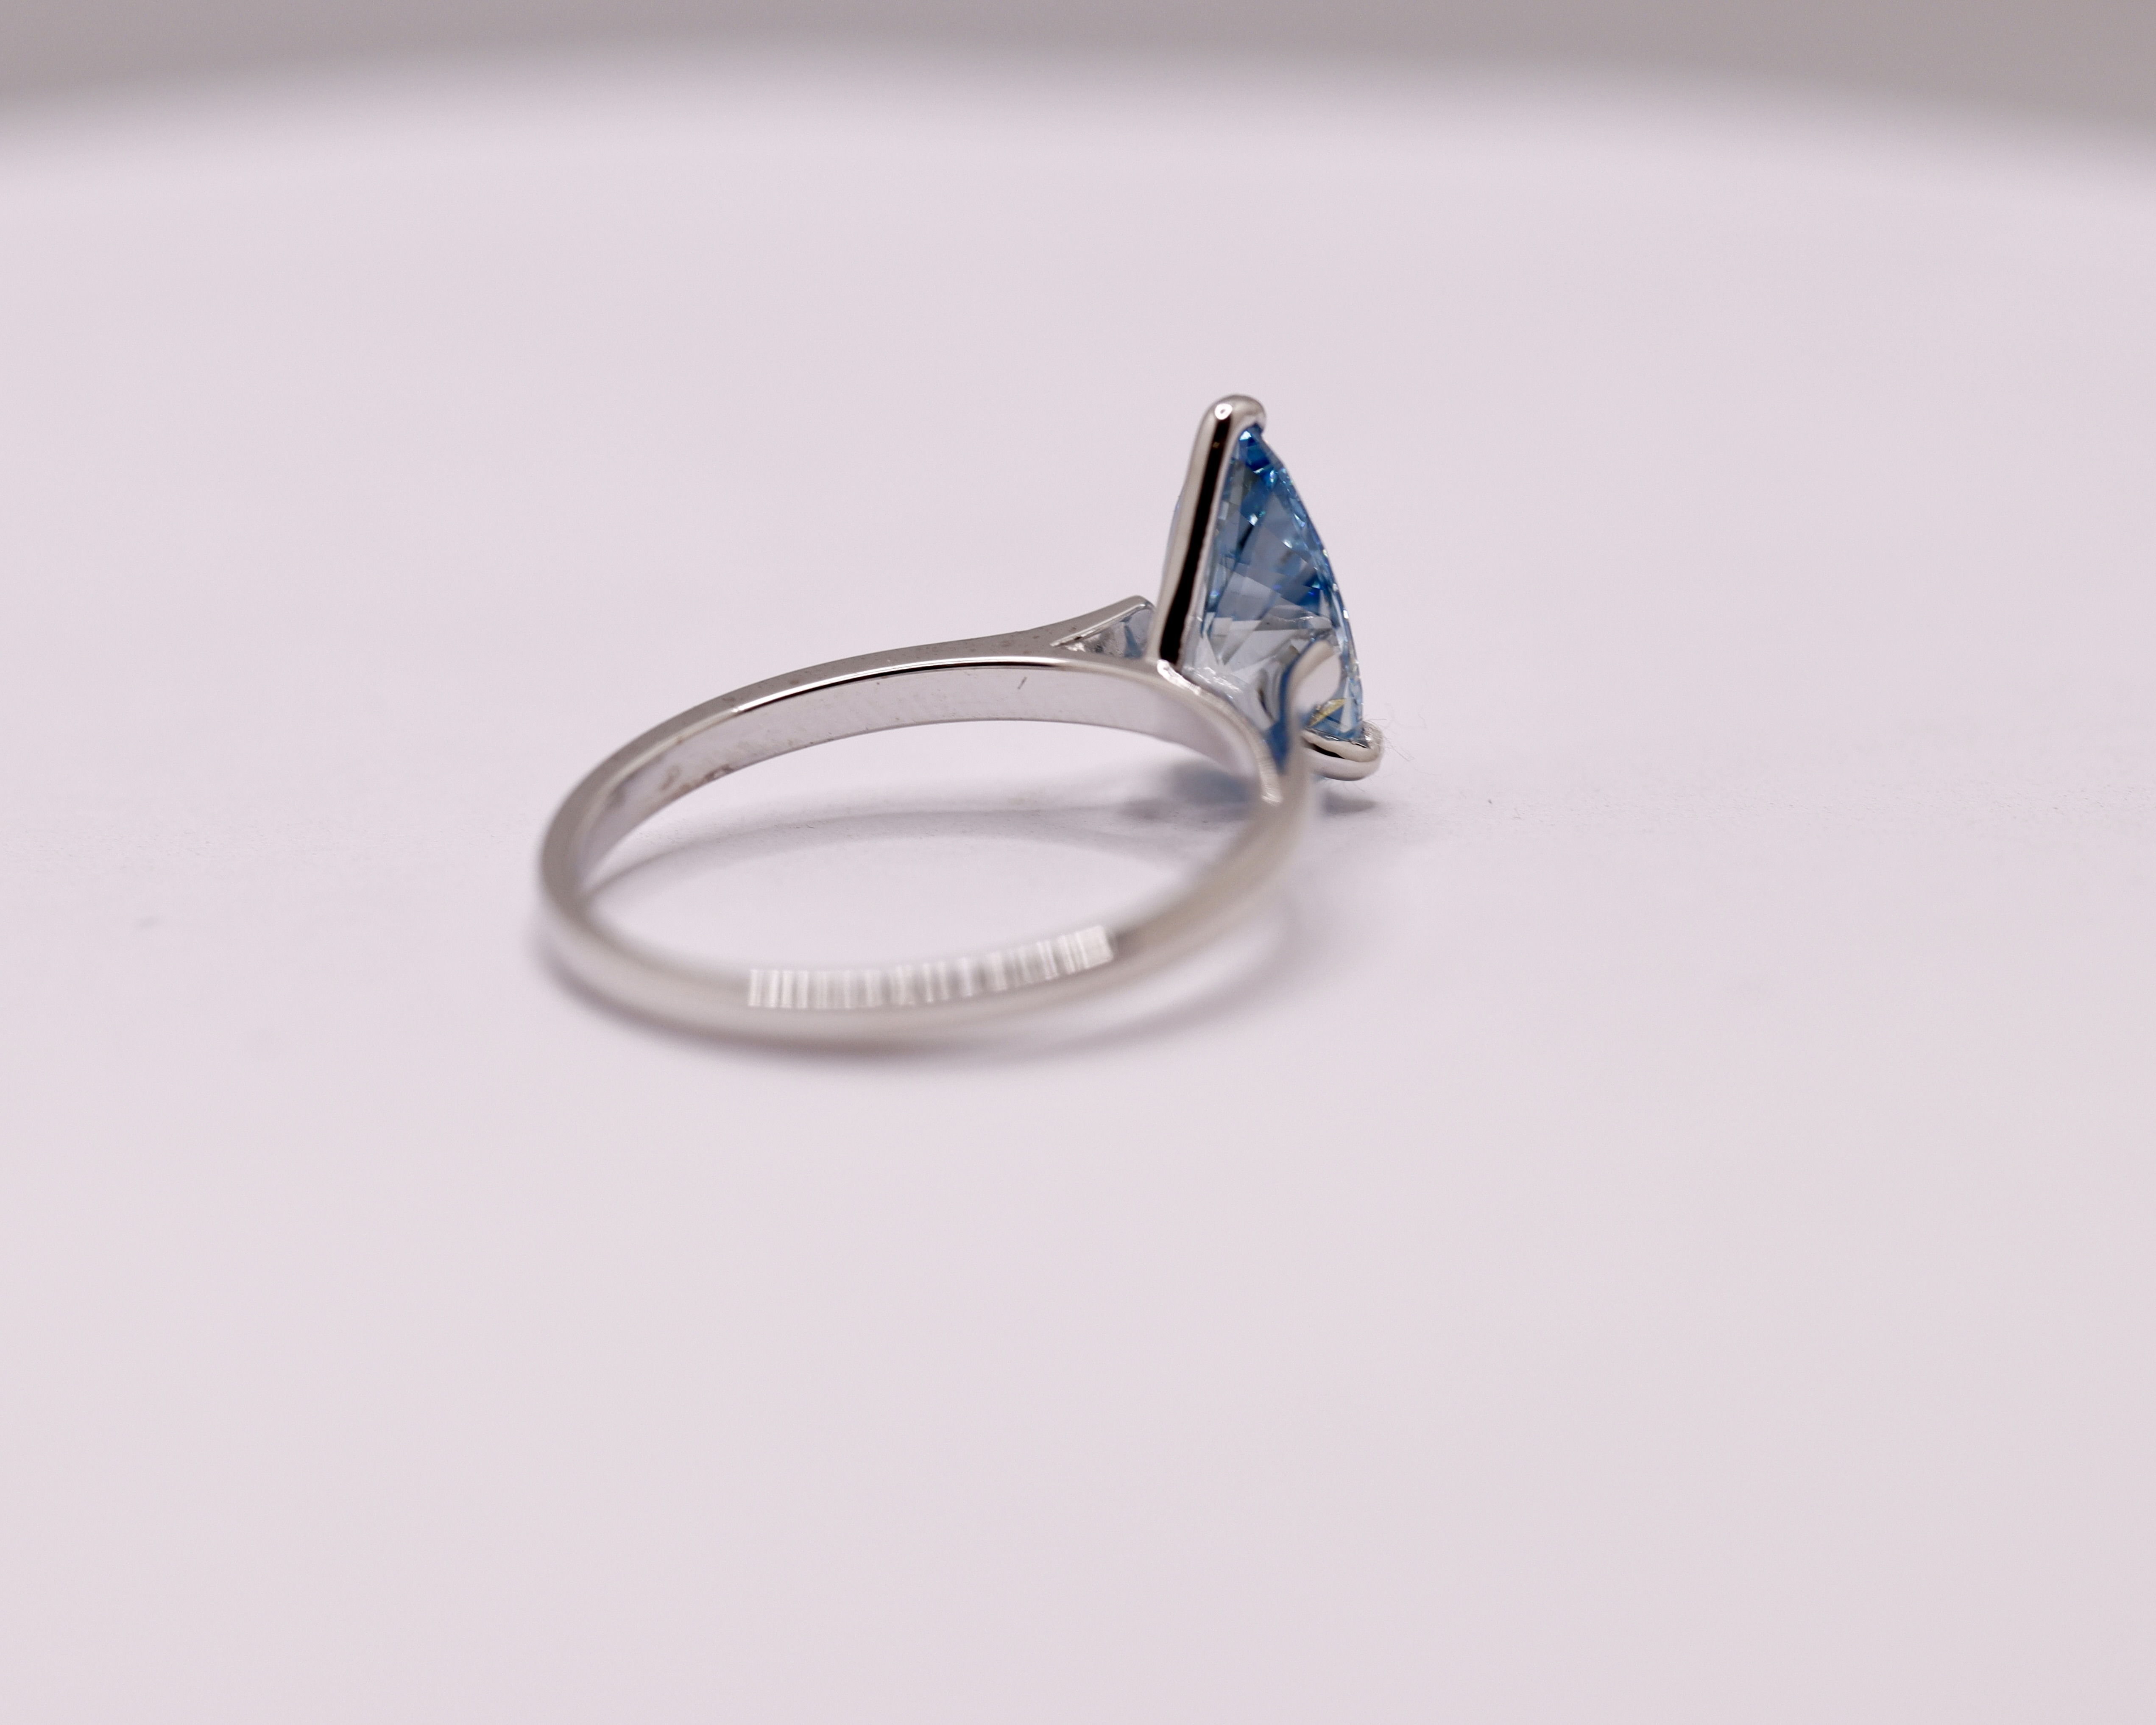 ** ON SALE ** Fancy Blue Pear Cut 1.60 Carat Diamond 18Kt White Gold Ring - VS1 - Image 5 of 6